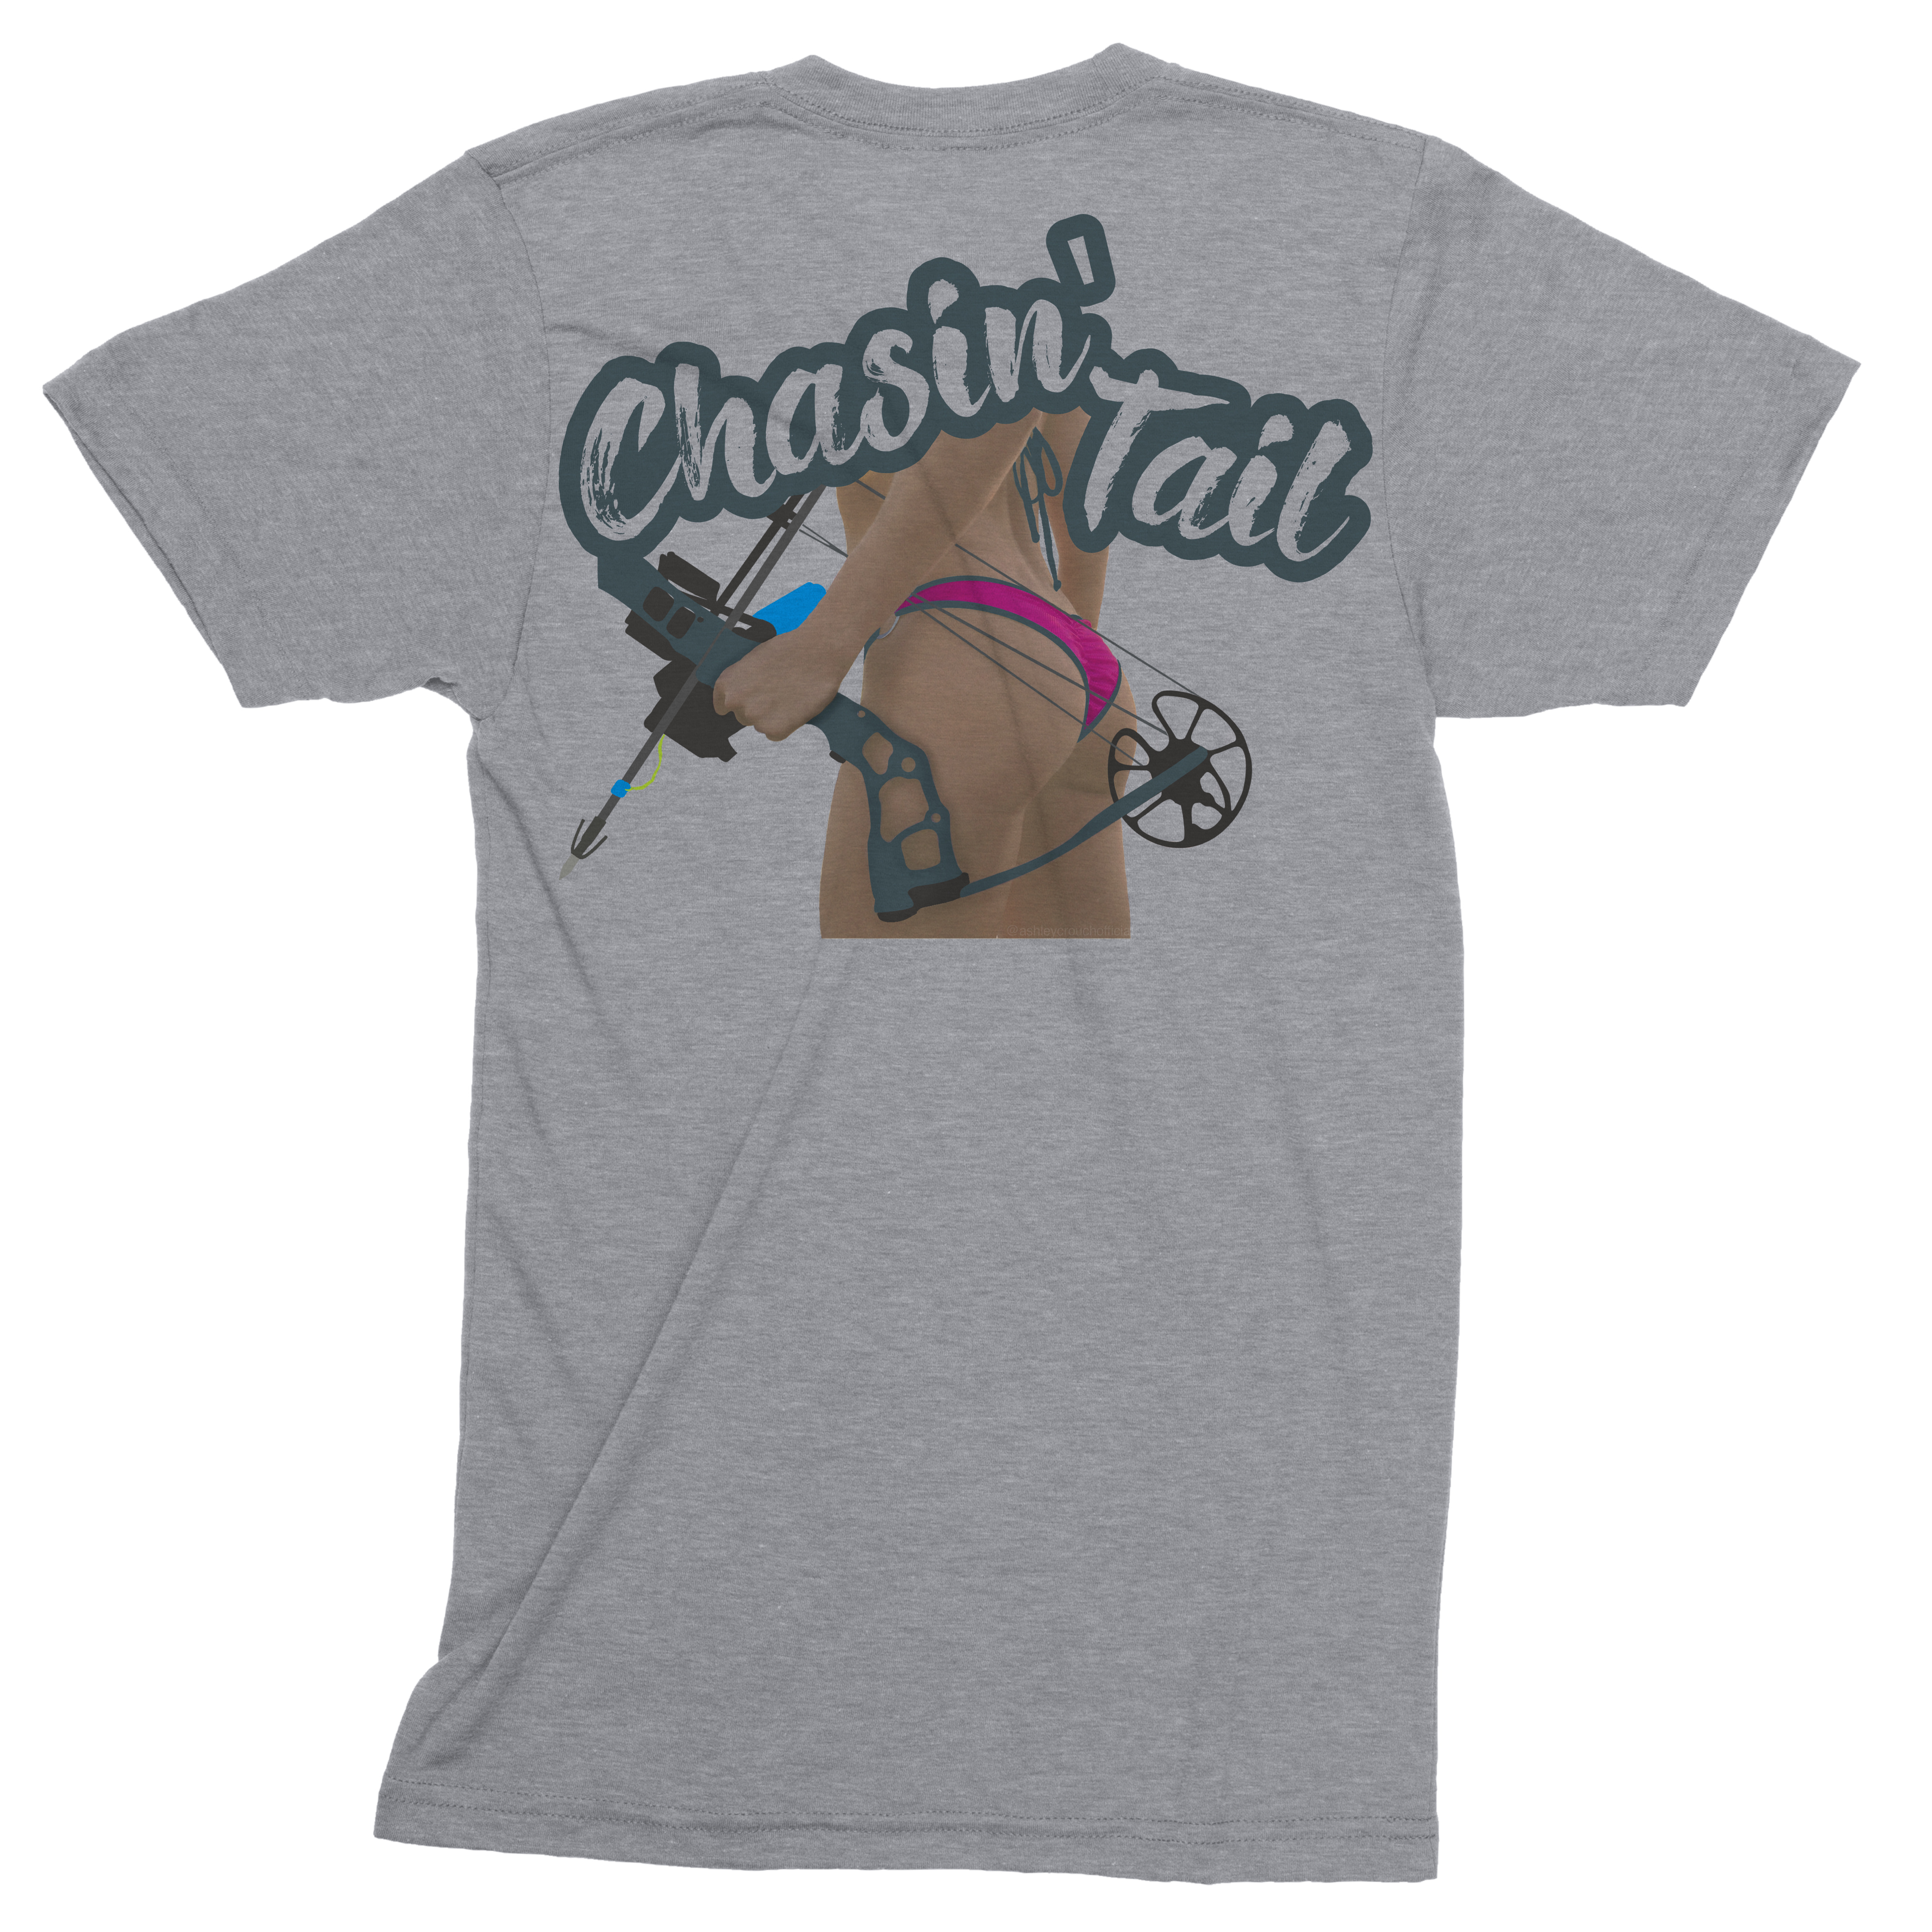 Chasin' Tail Hammerhead Performance Fishing Shirt